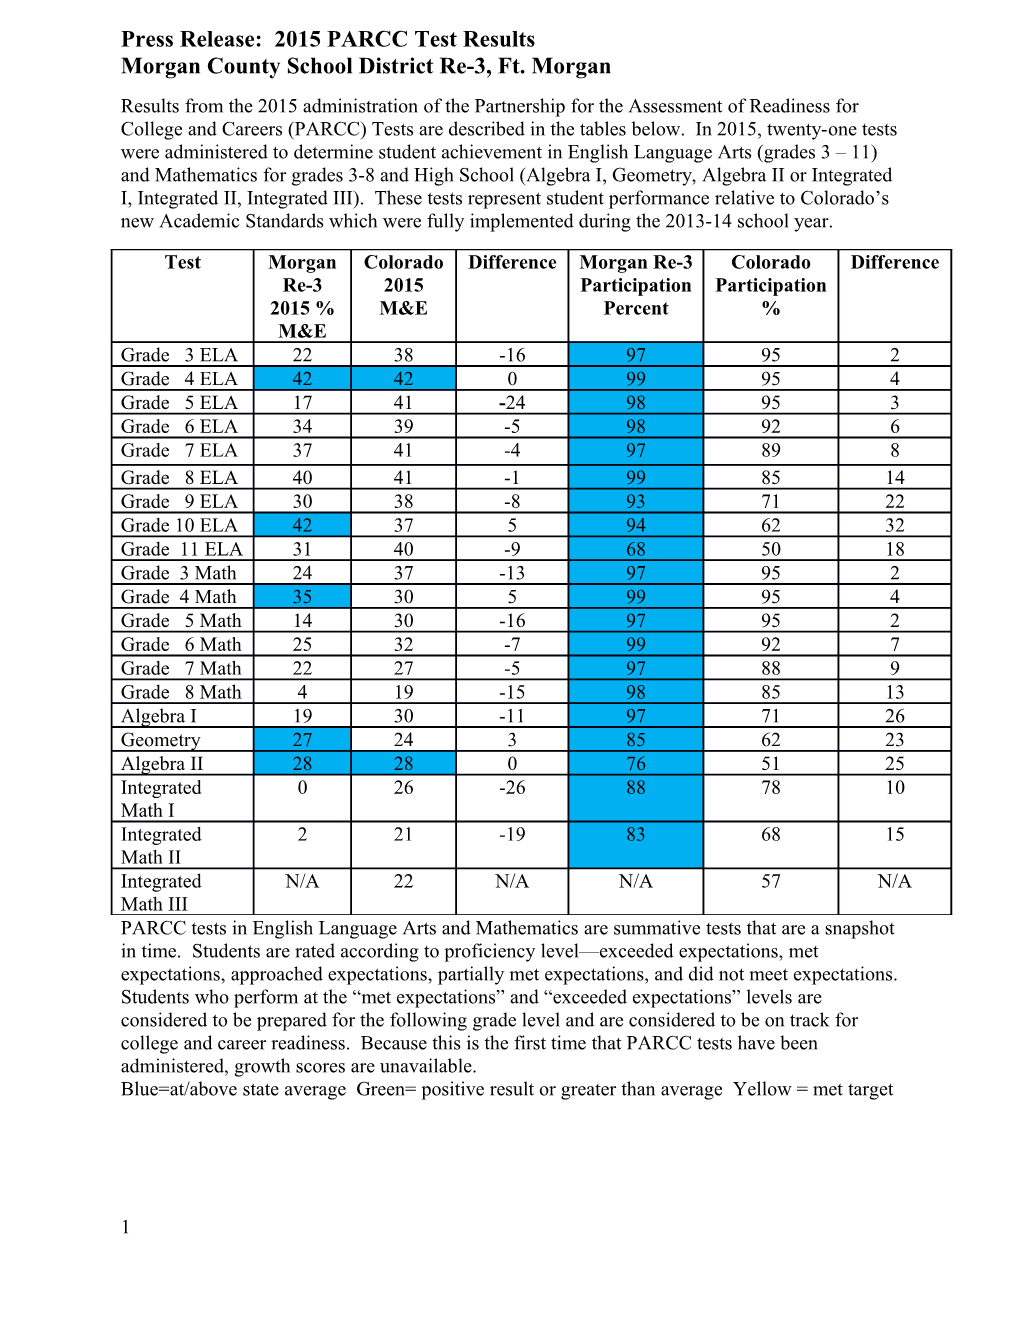 Press Release: 2006 CSAP Test Results